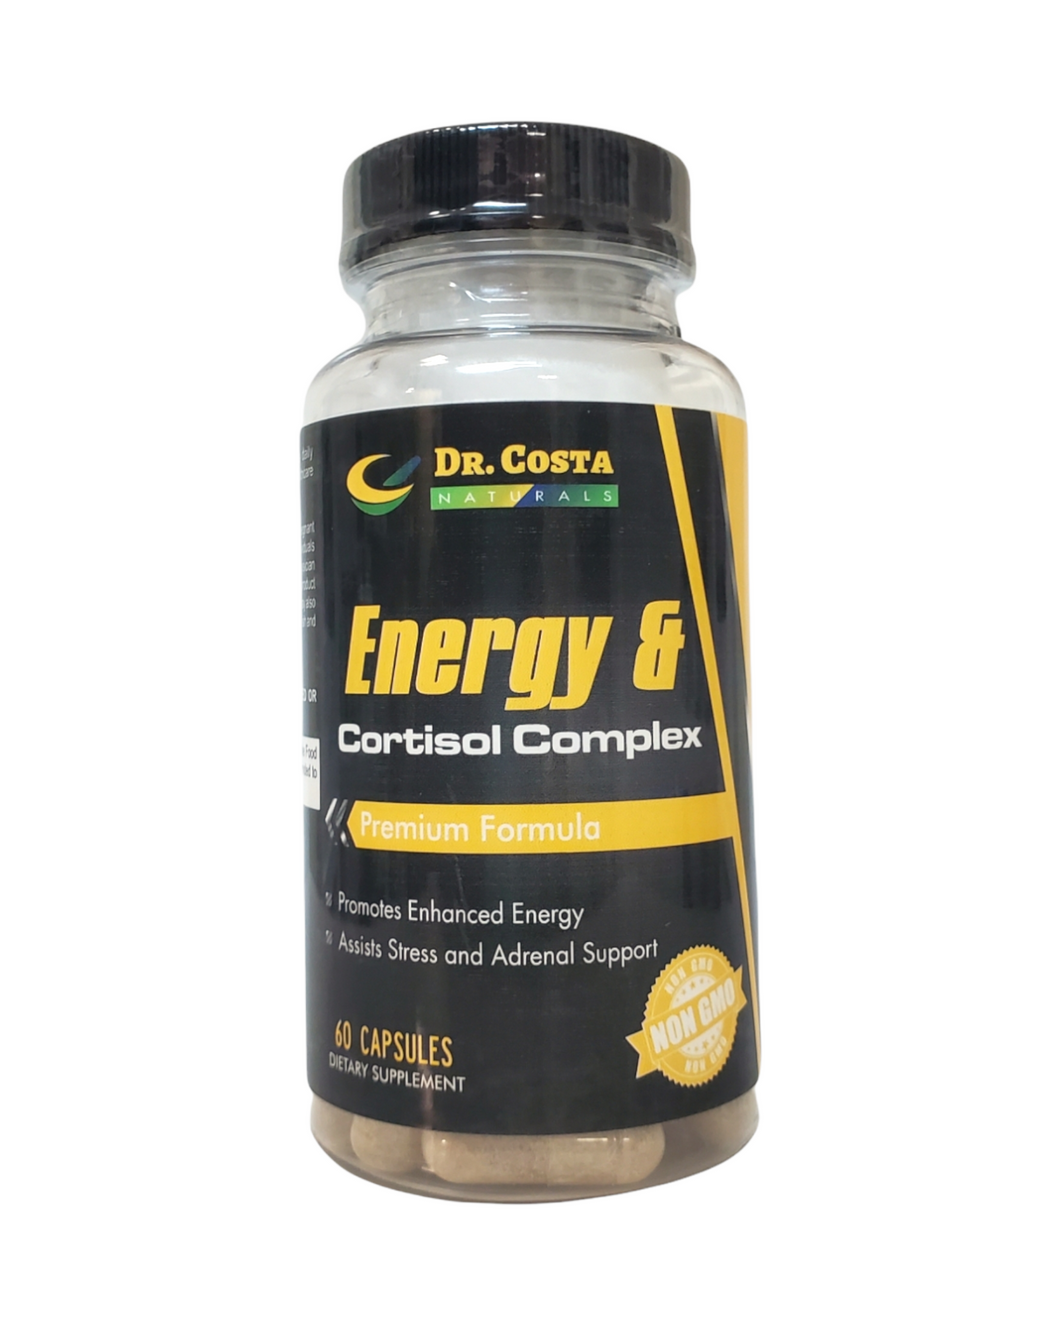 Energy & Cortisol Complex